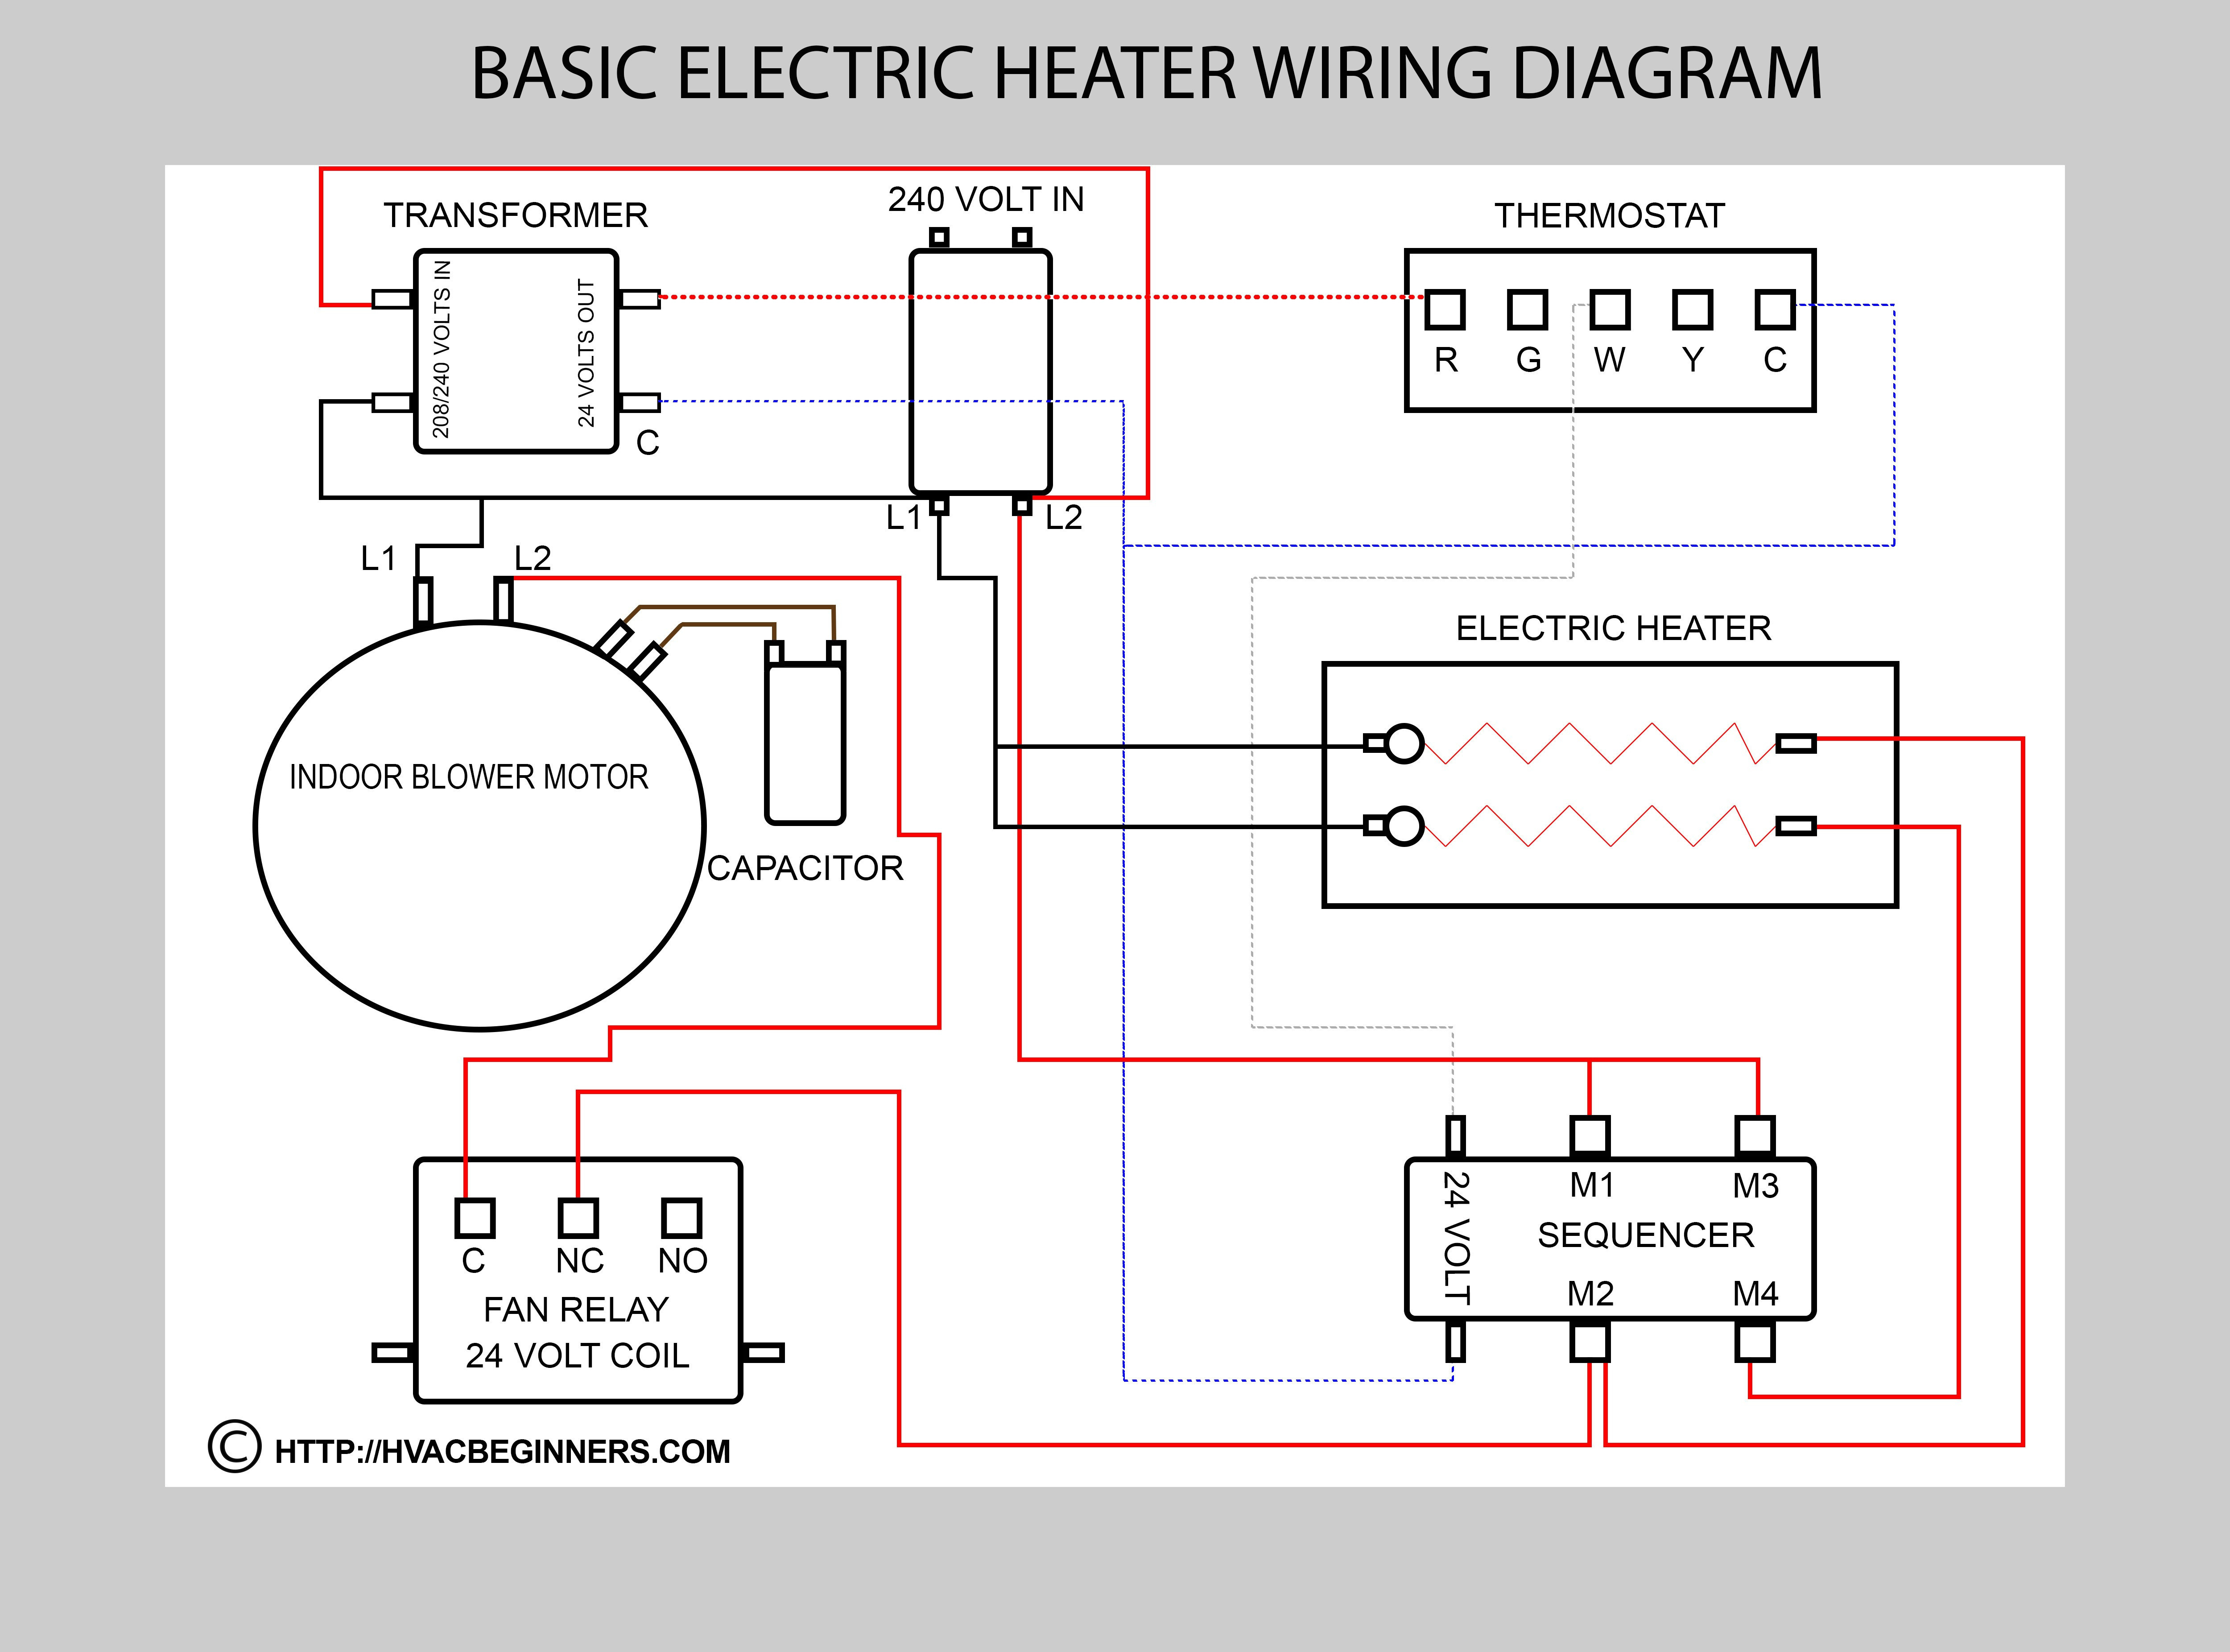 X13 Wiring Diagram | Wiring Diagram - Electric Heater Wiring Diagram